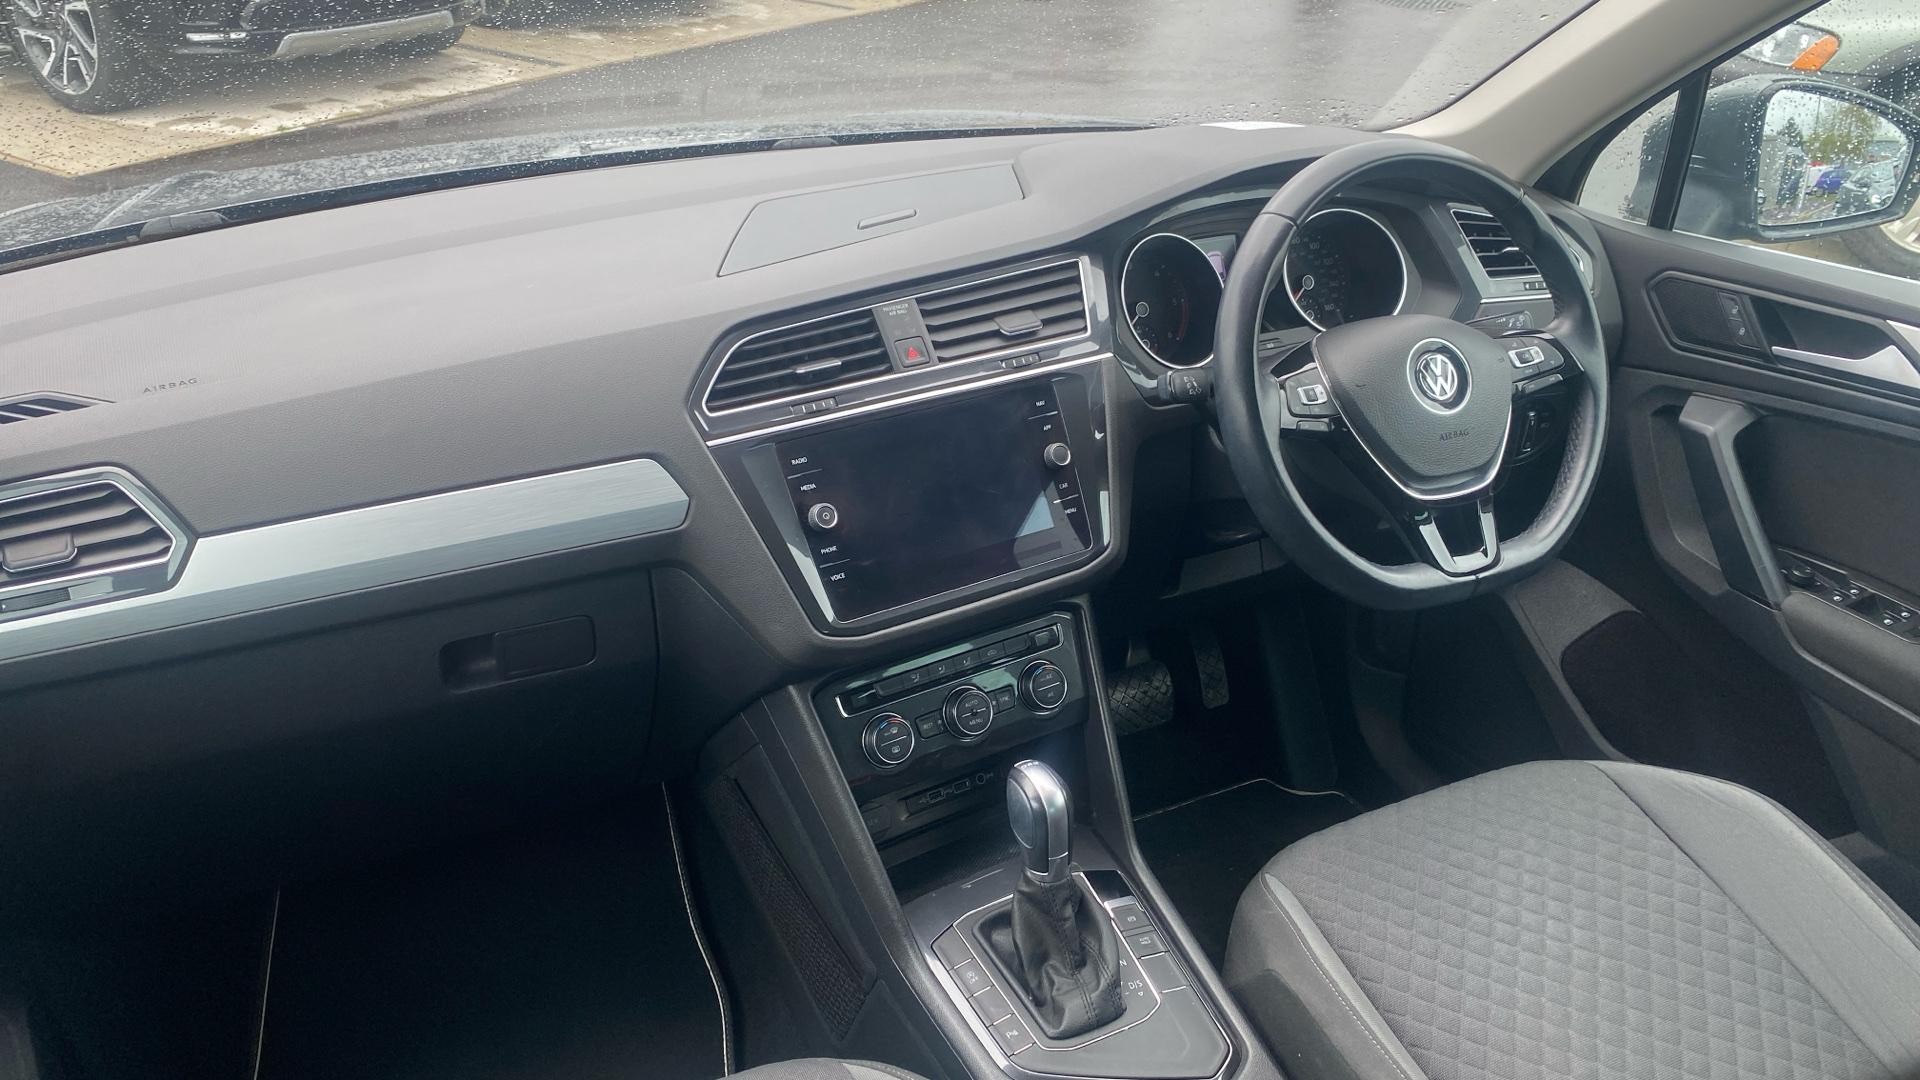 Volkswagen Tiguan 2.0 TDI SE Navigation DSG Euro 6 (s/s) 5dr (ML68VVS) image 3